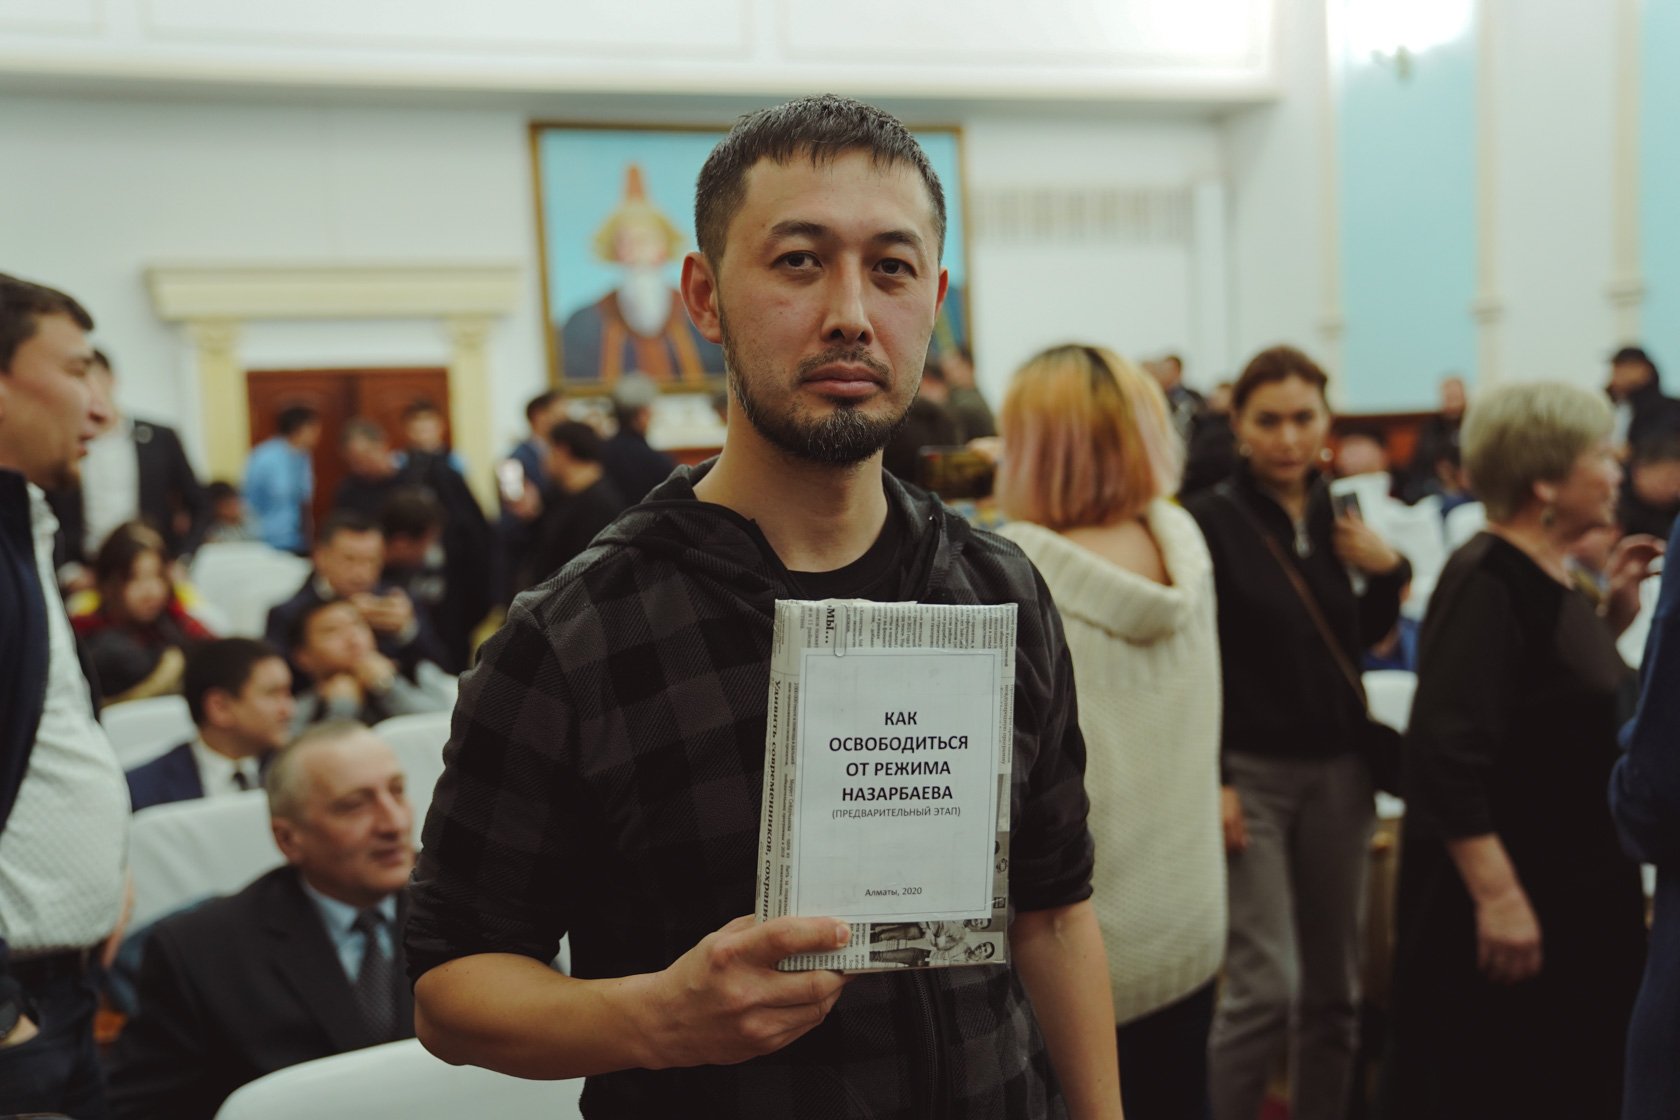 Kazakhstan activist Alnur Ilyashev holding a sign